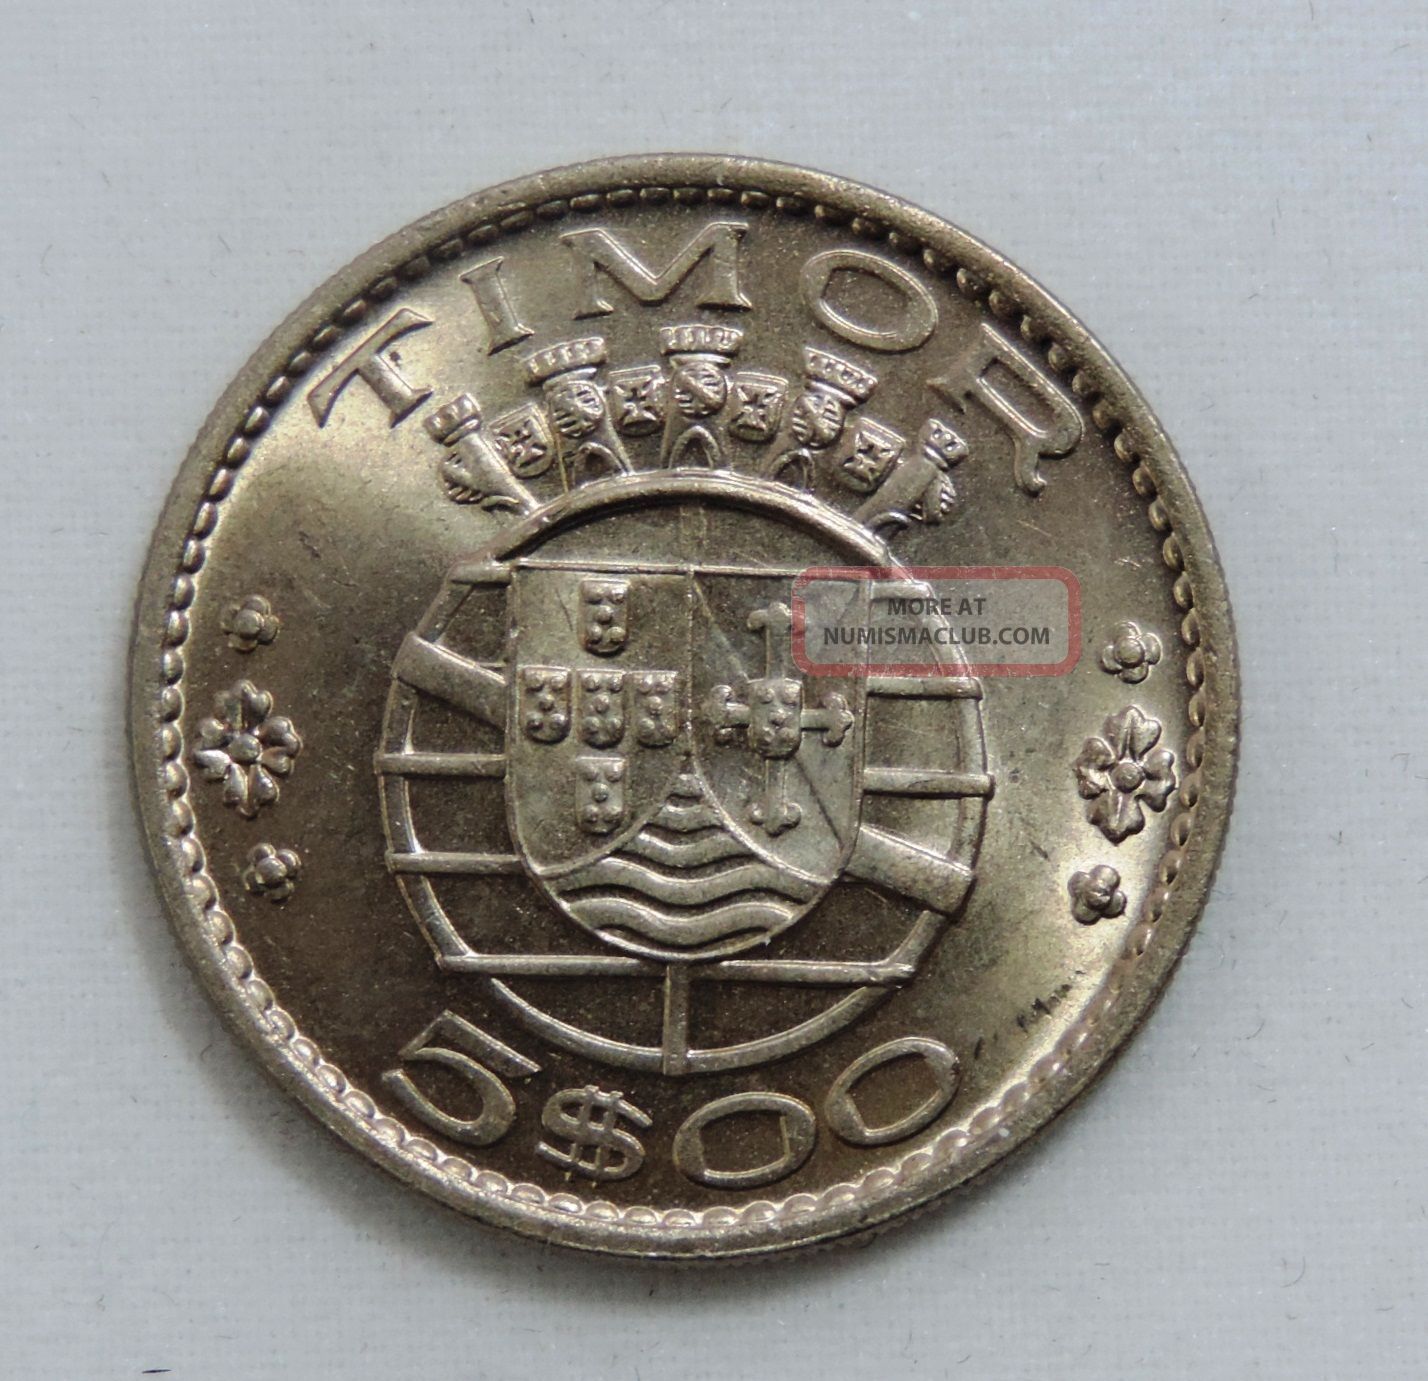 Timor Coin, 5$00 Escudos 1970 Unciruclated, Km 21 Nickel